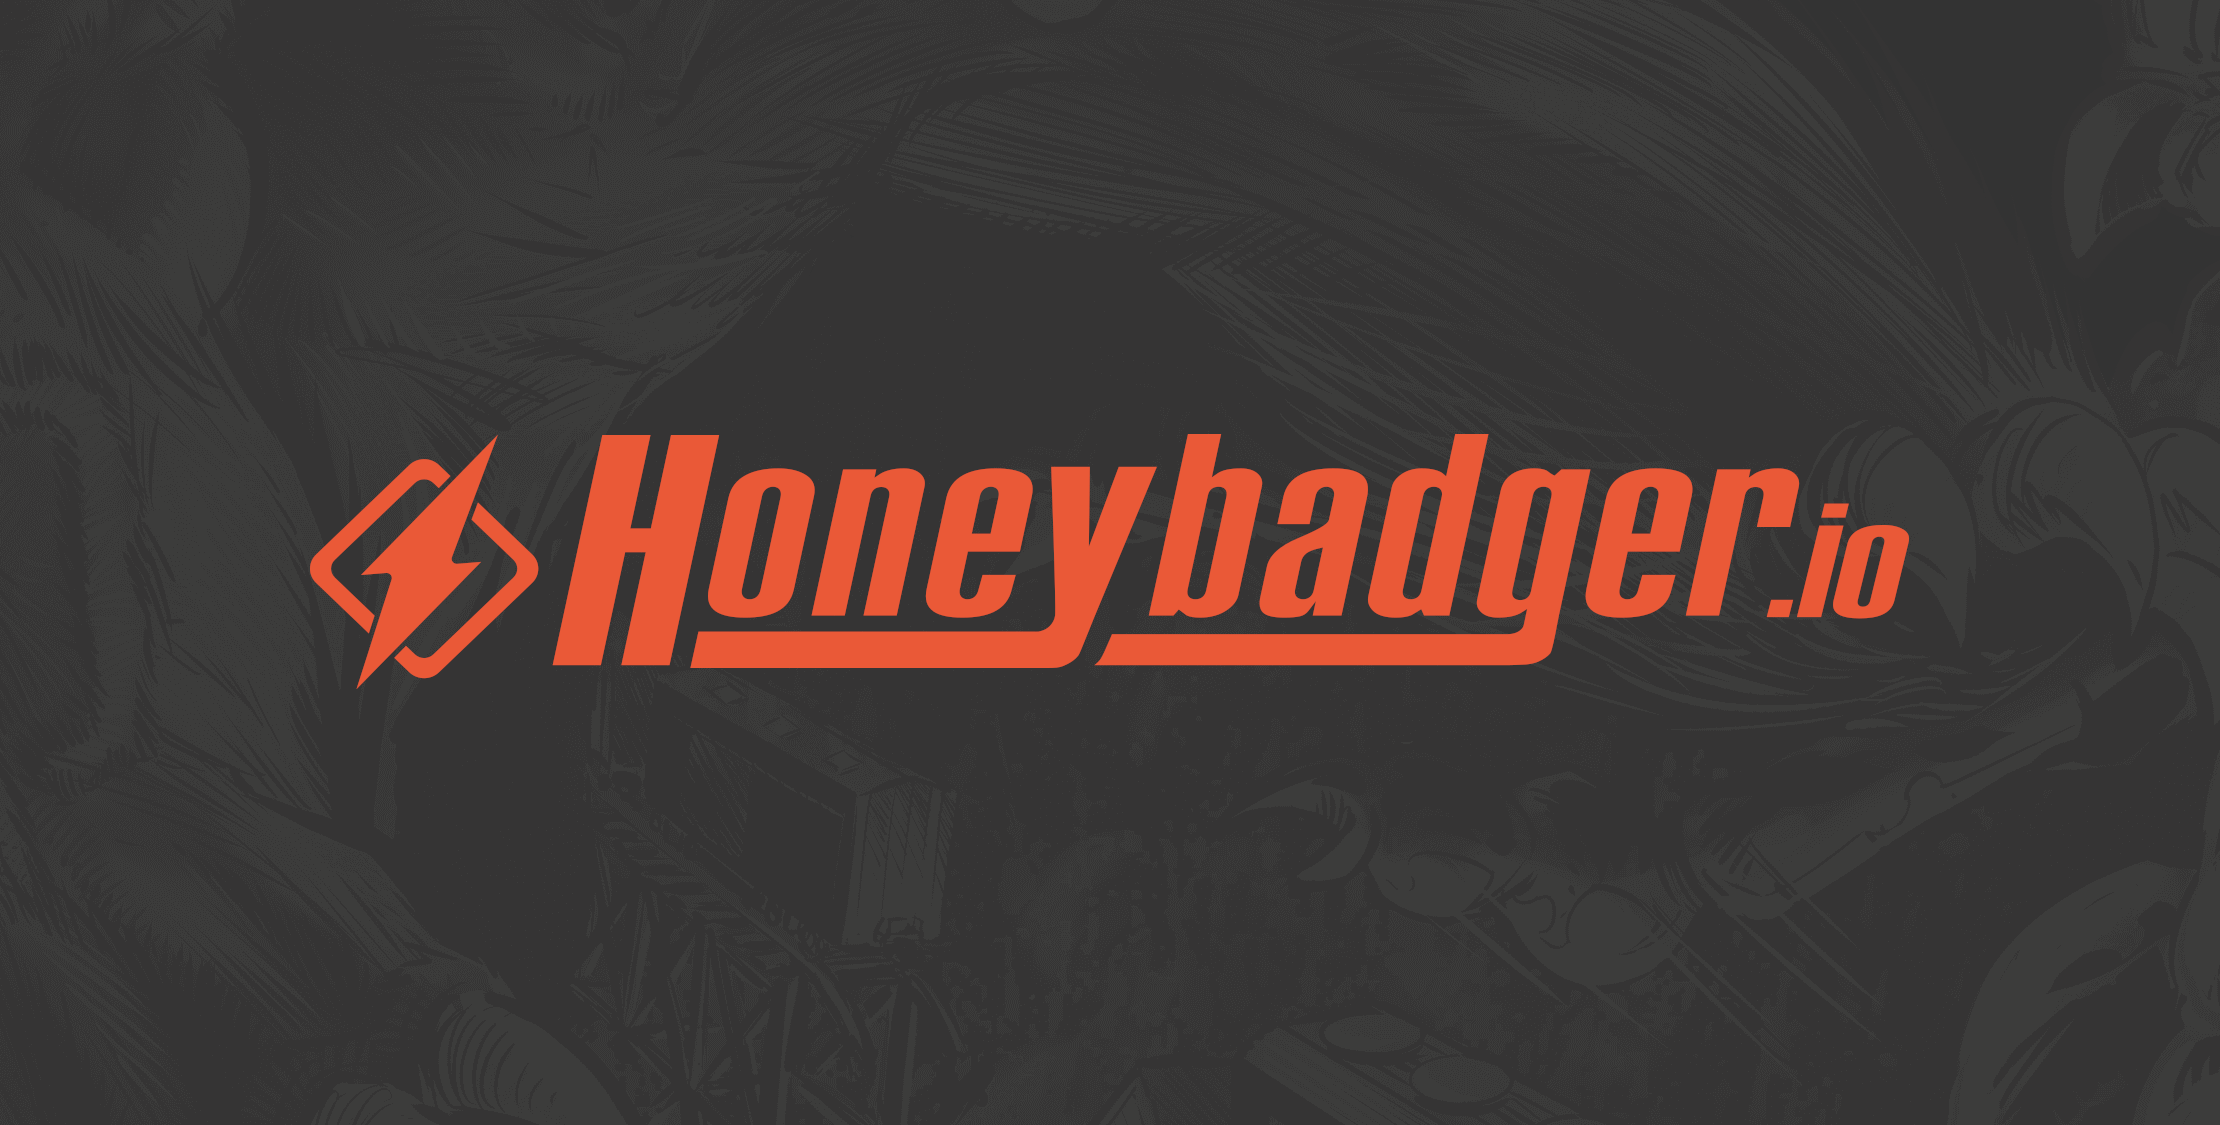 Honeybadger for Nova image